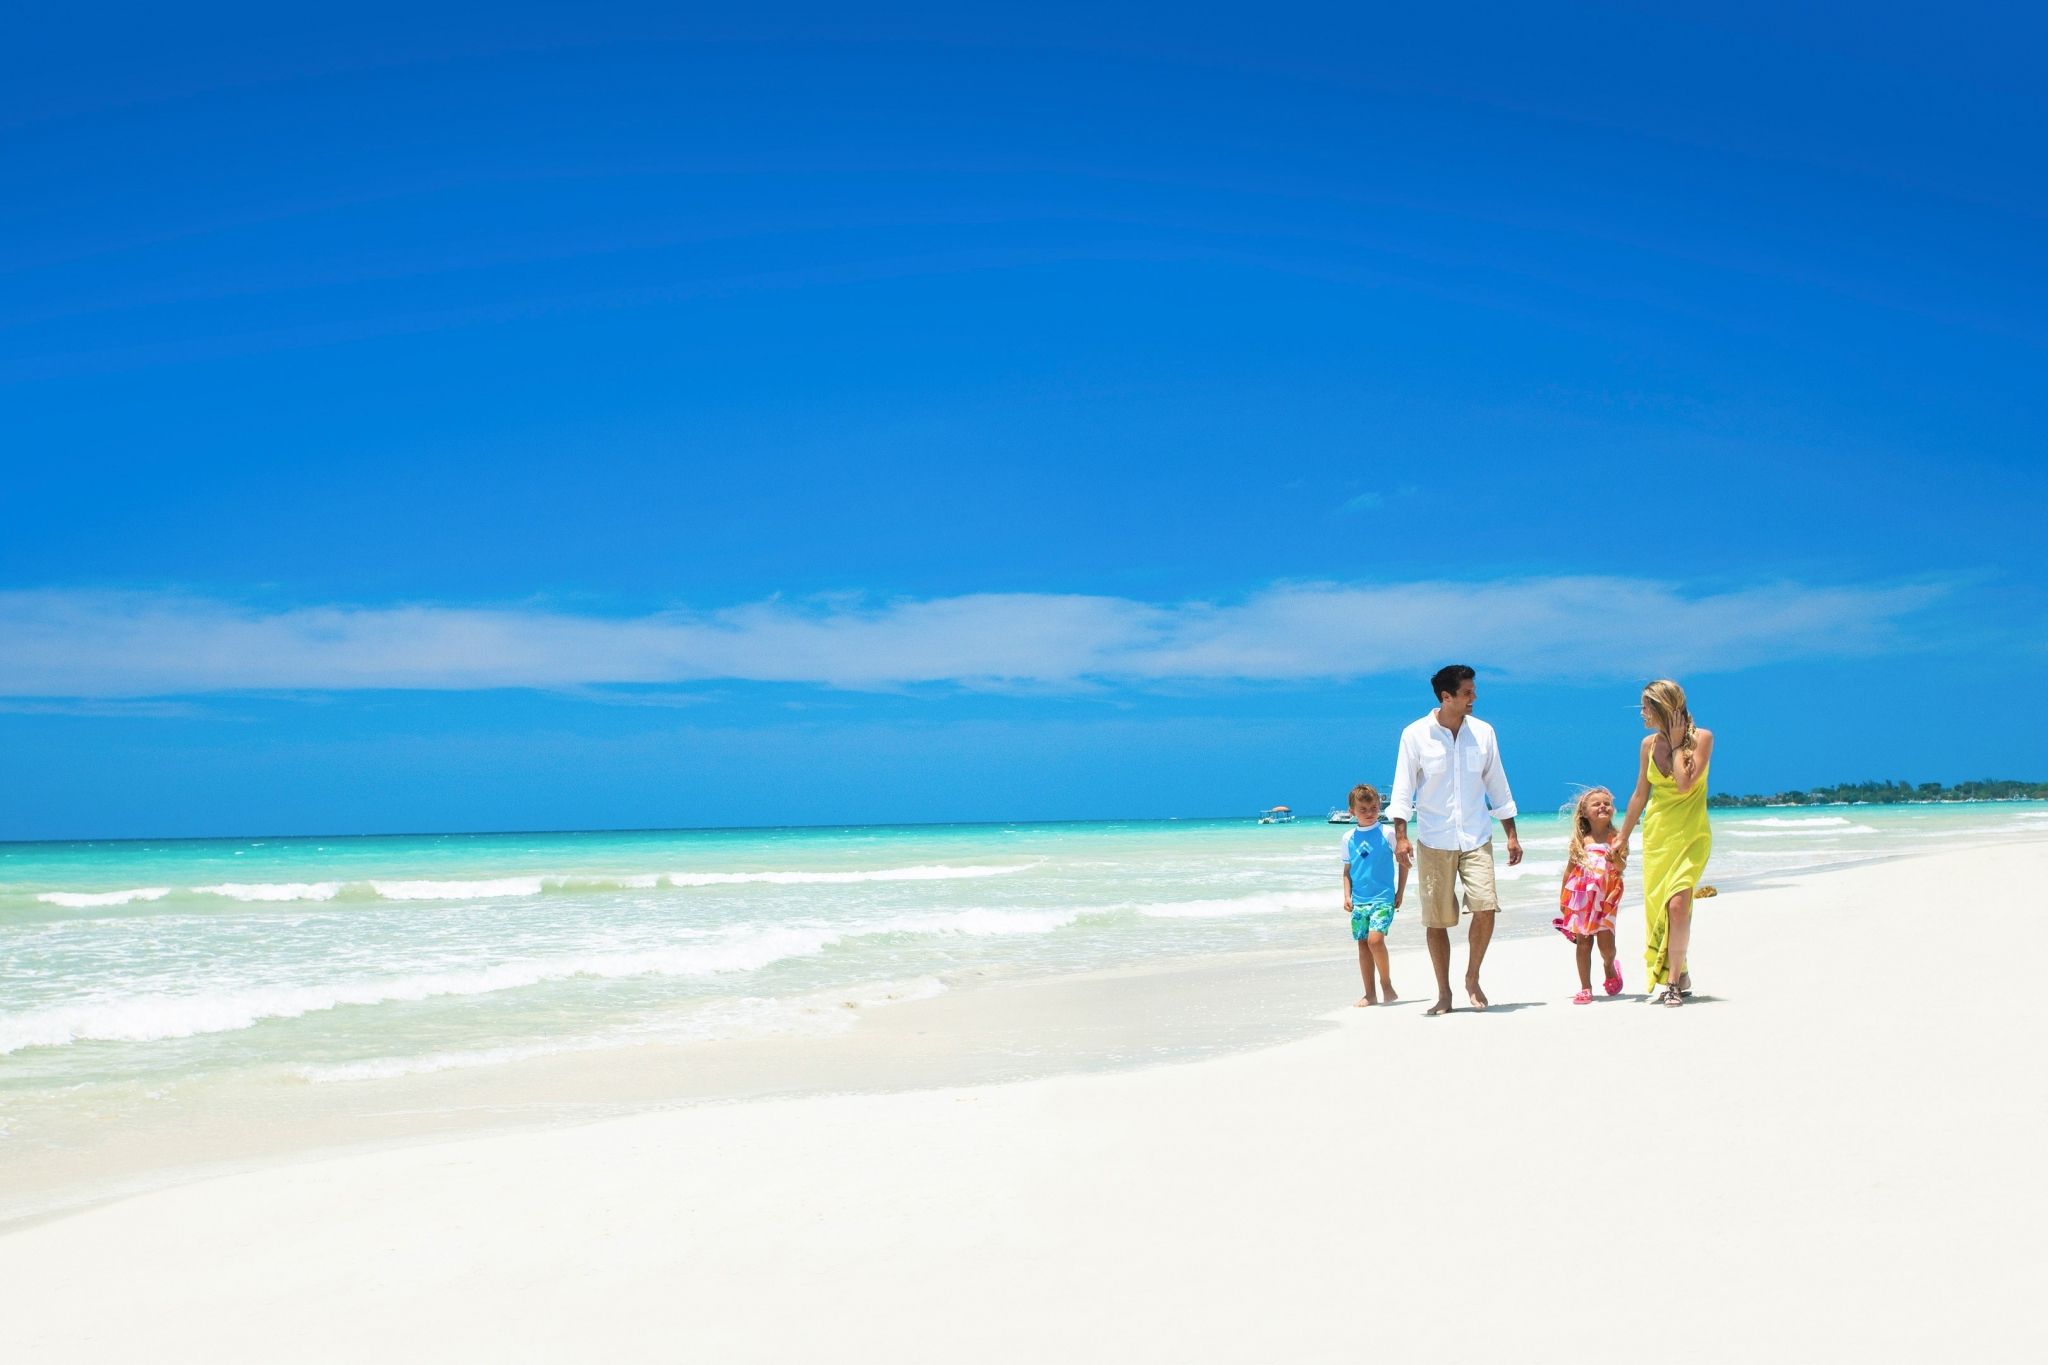 holiday HD widescreen wallpaper for desktop. Egypt tours, Family beach picture, Beach